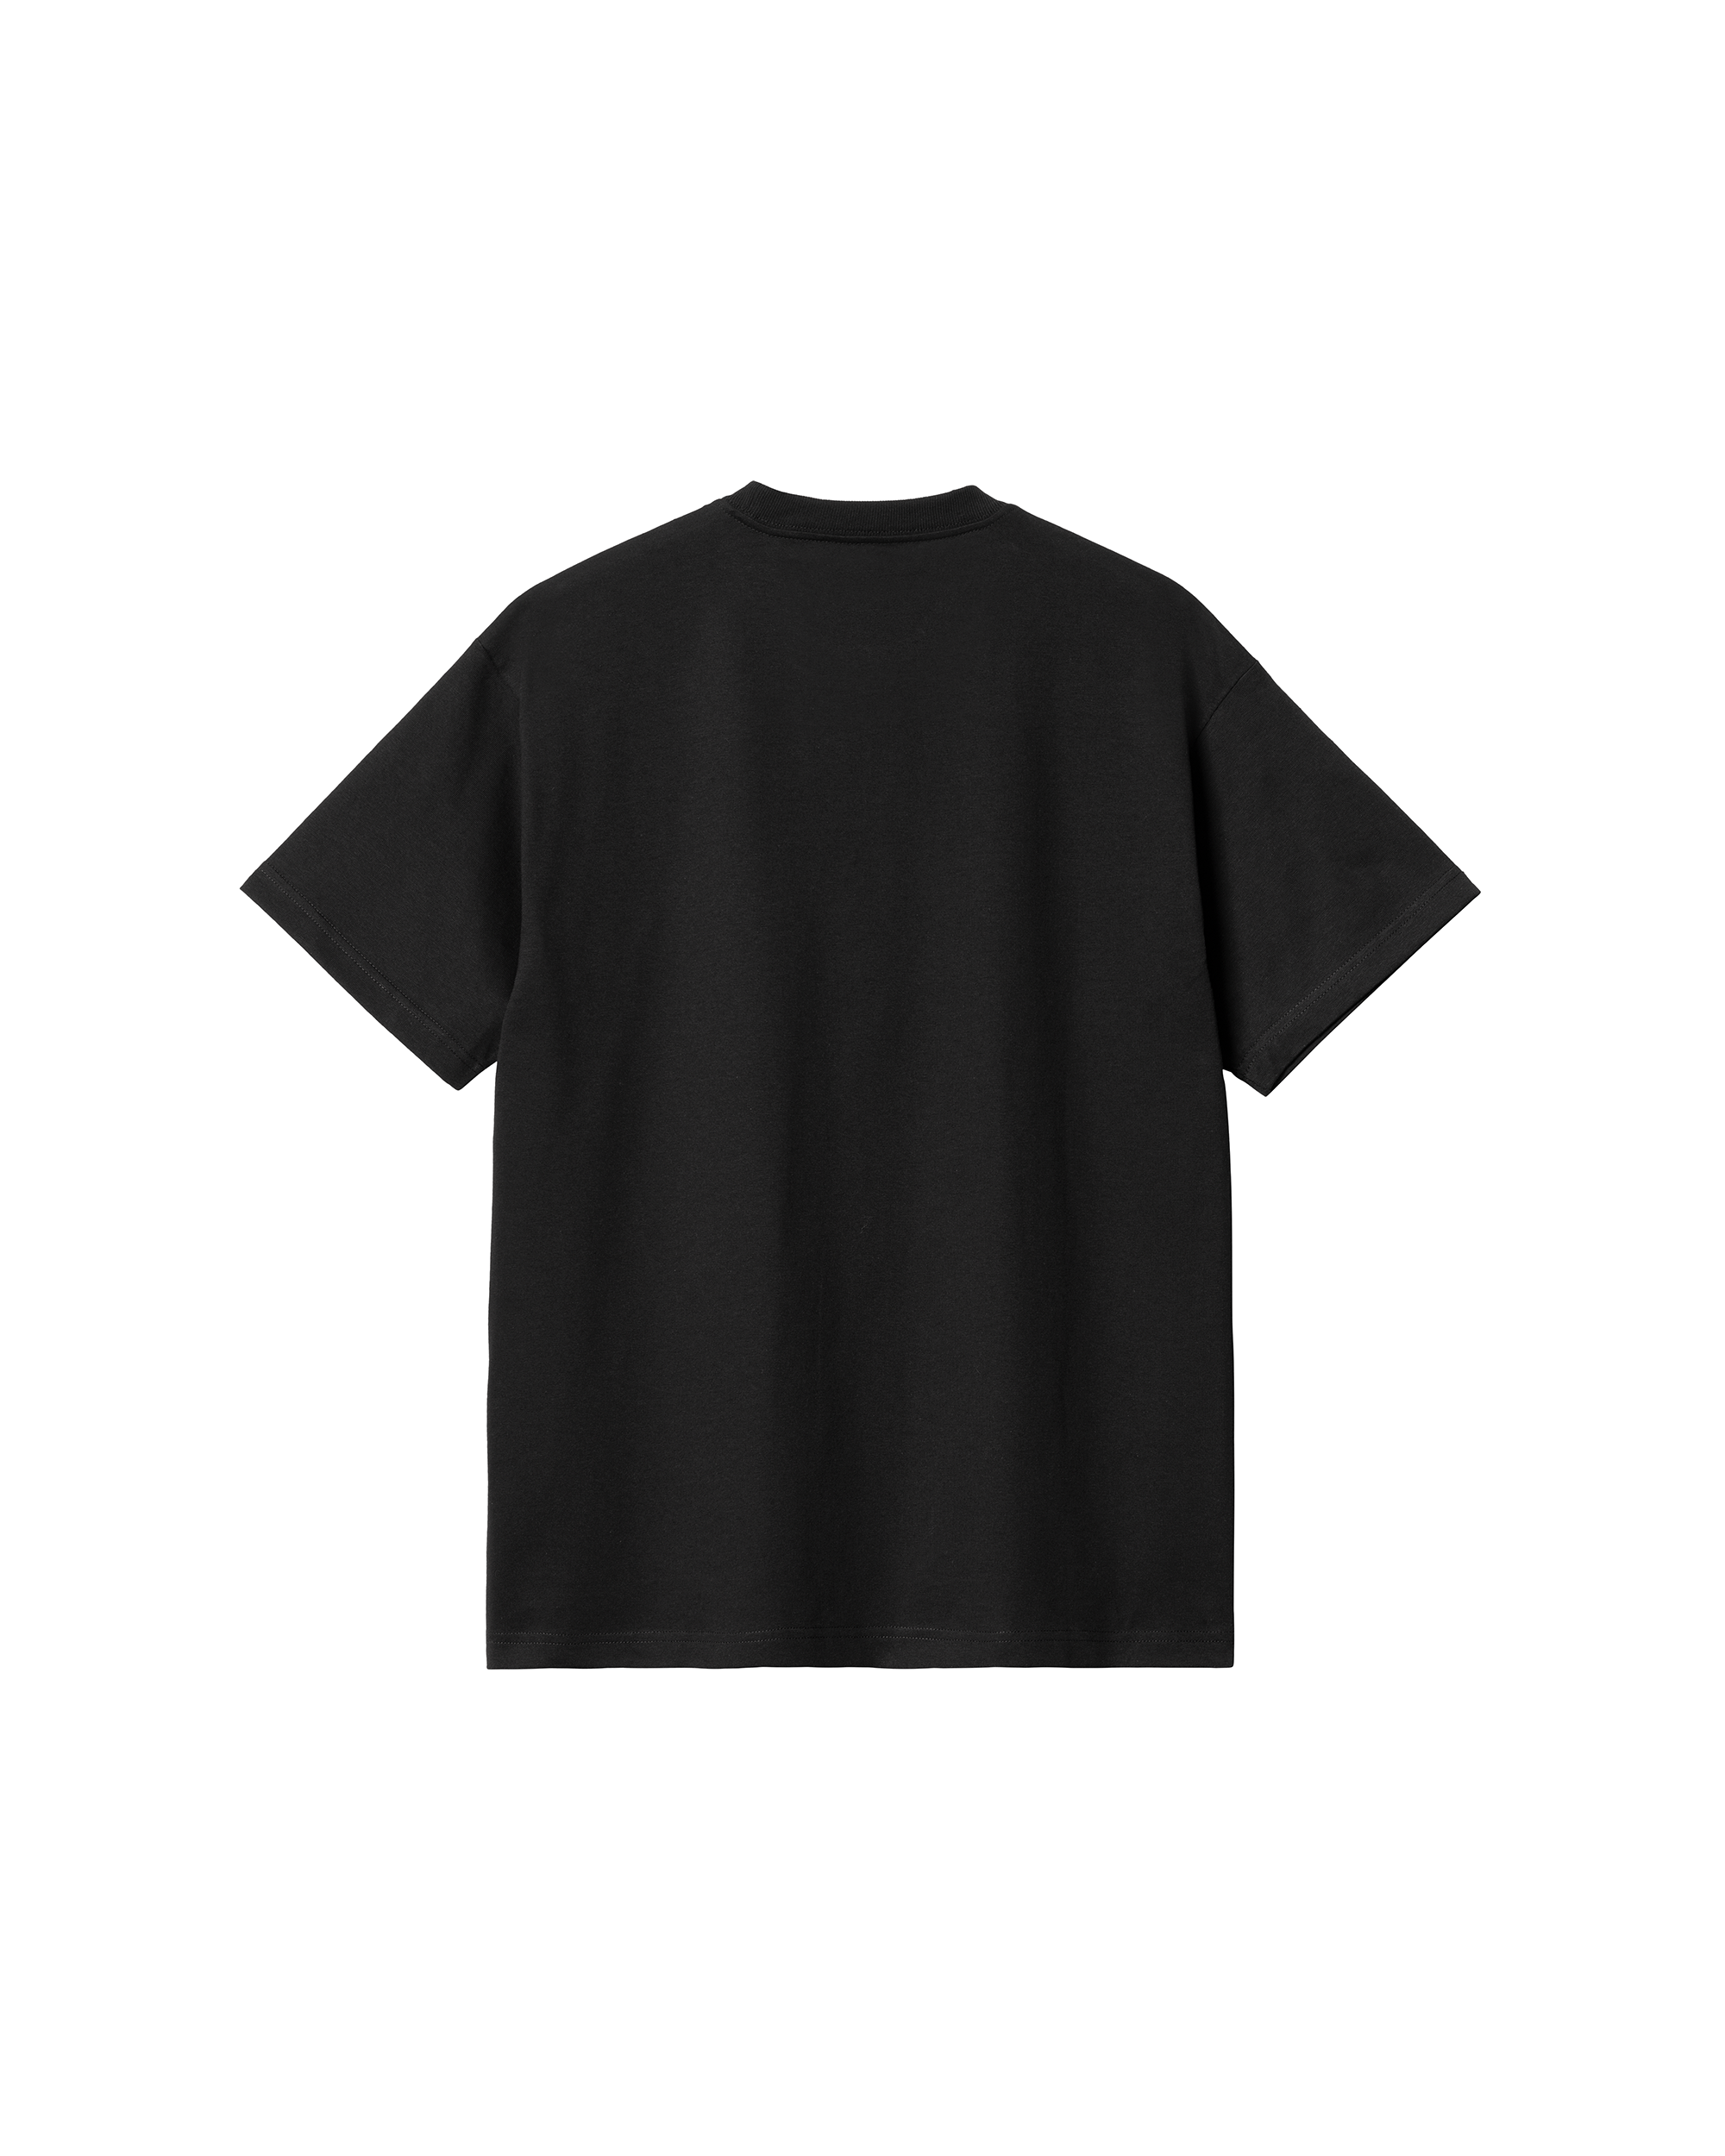 S/S Throw Up T-Shirt - Black